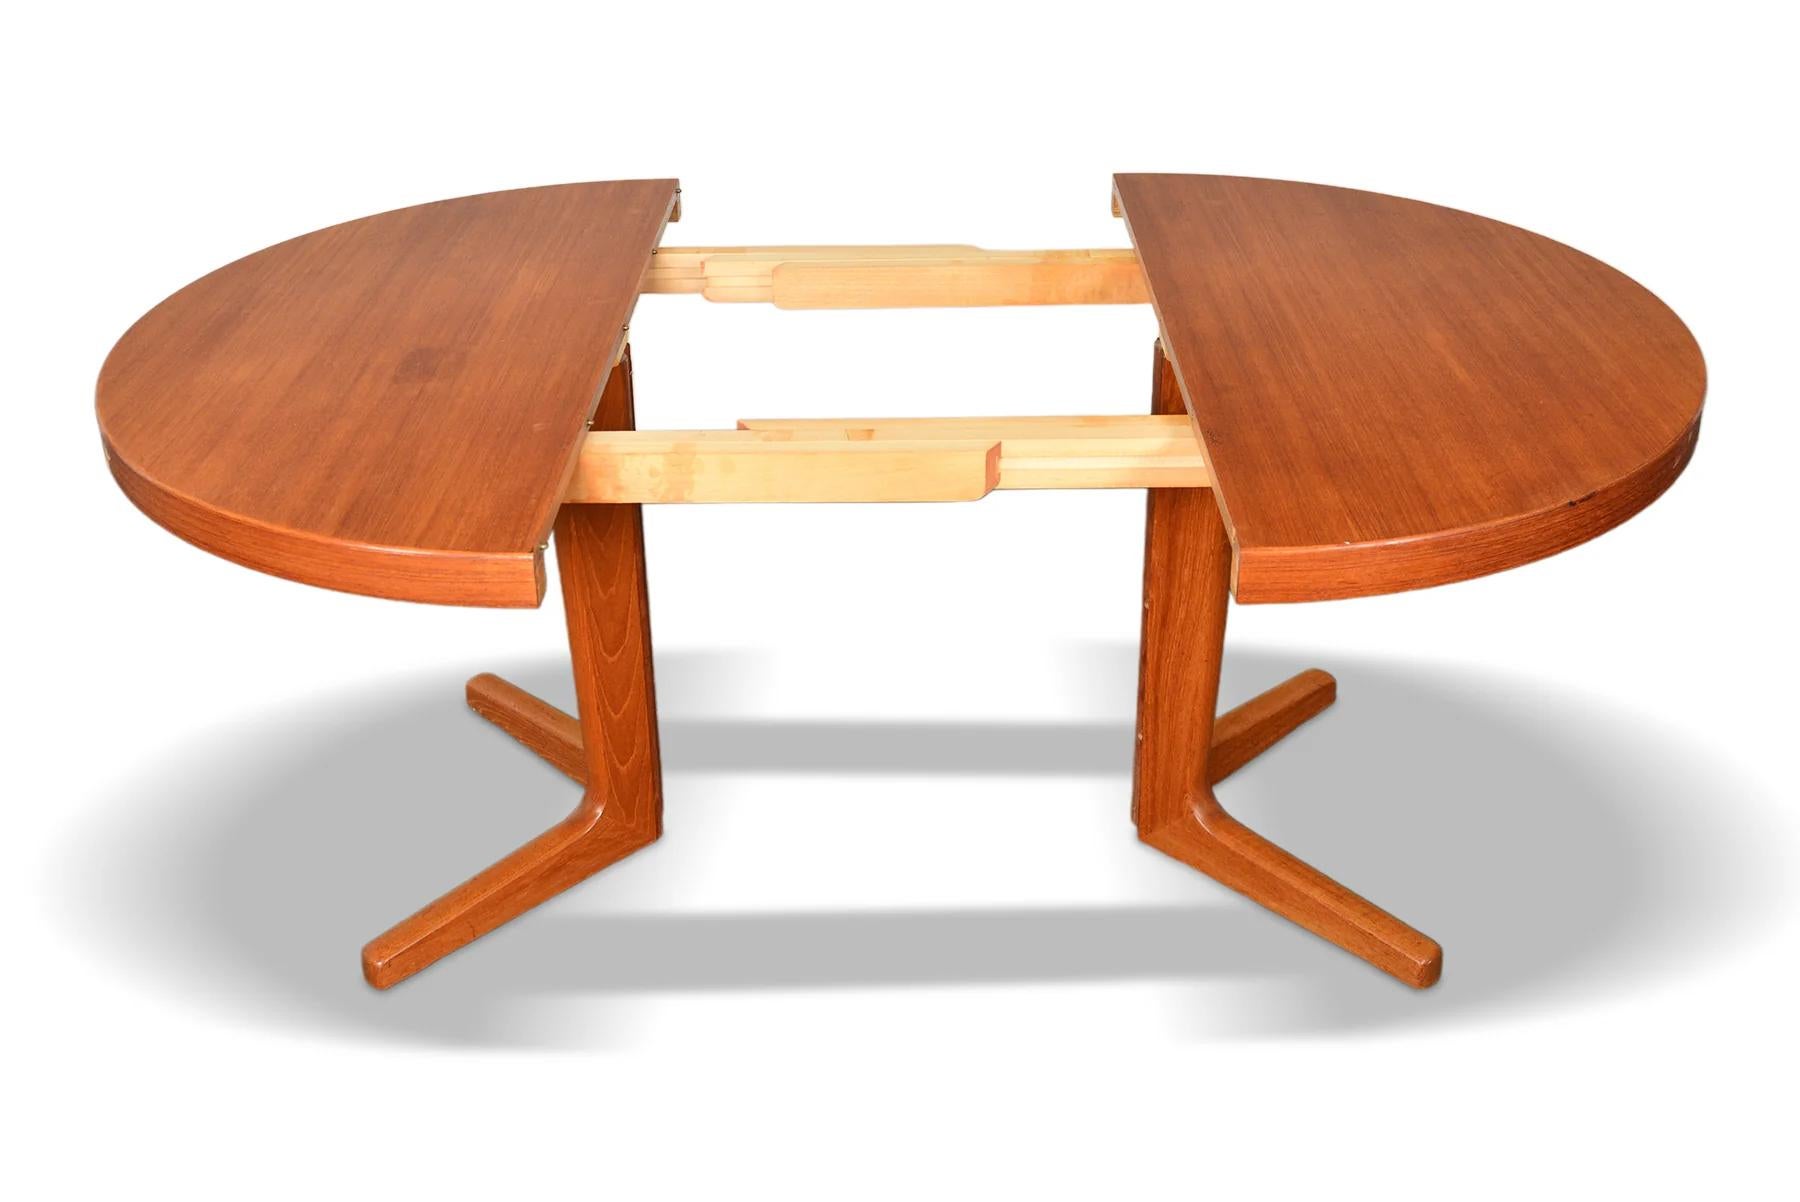 20th Century Danish Modern Teak Pedestal Dining Table With One Leaf